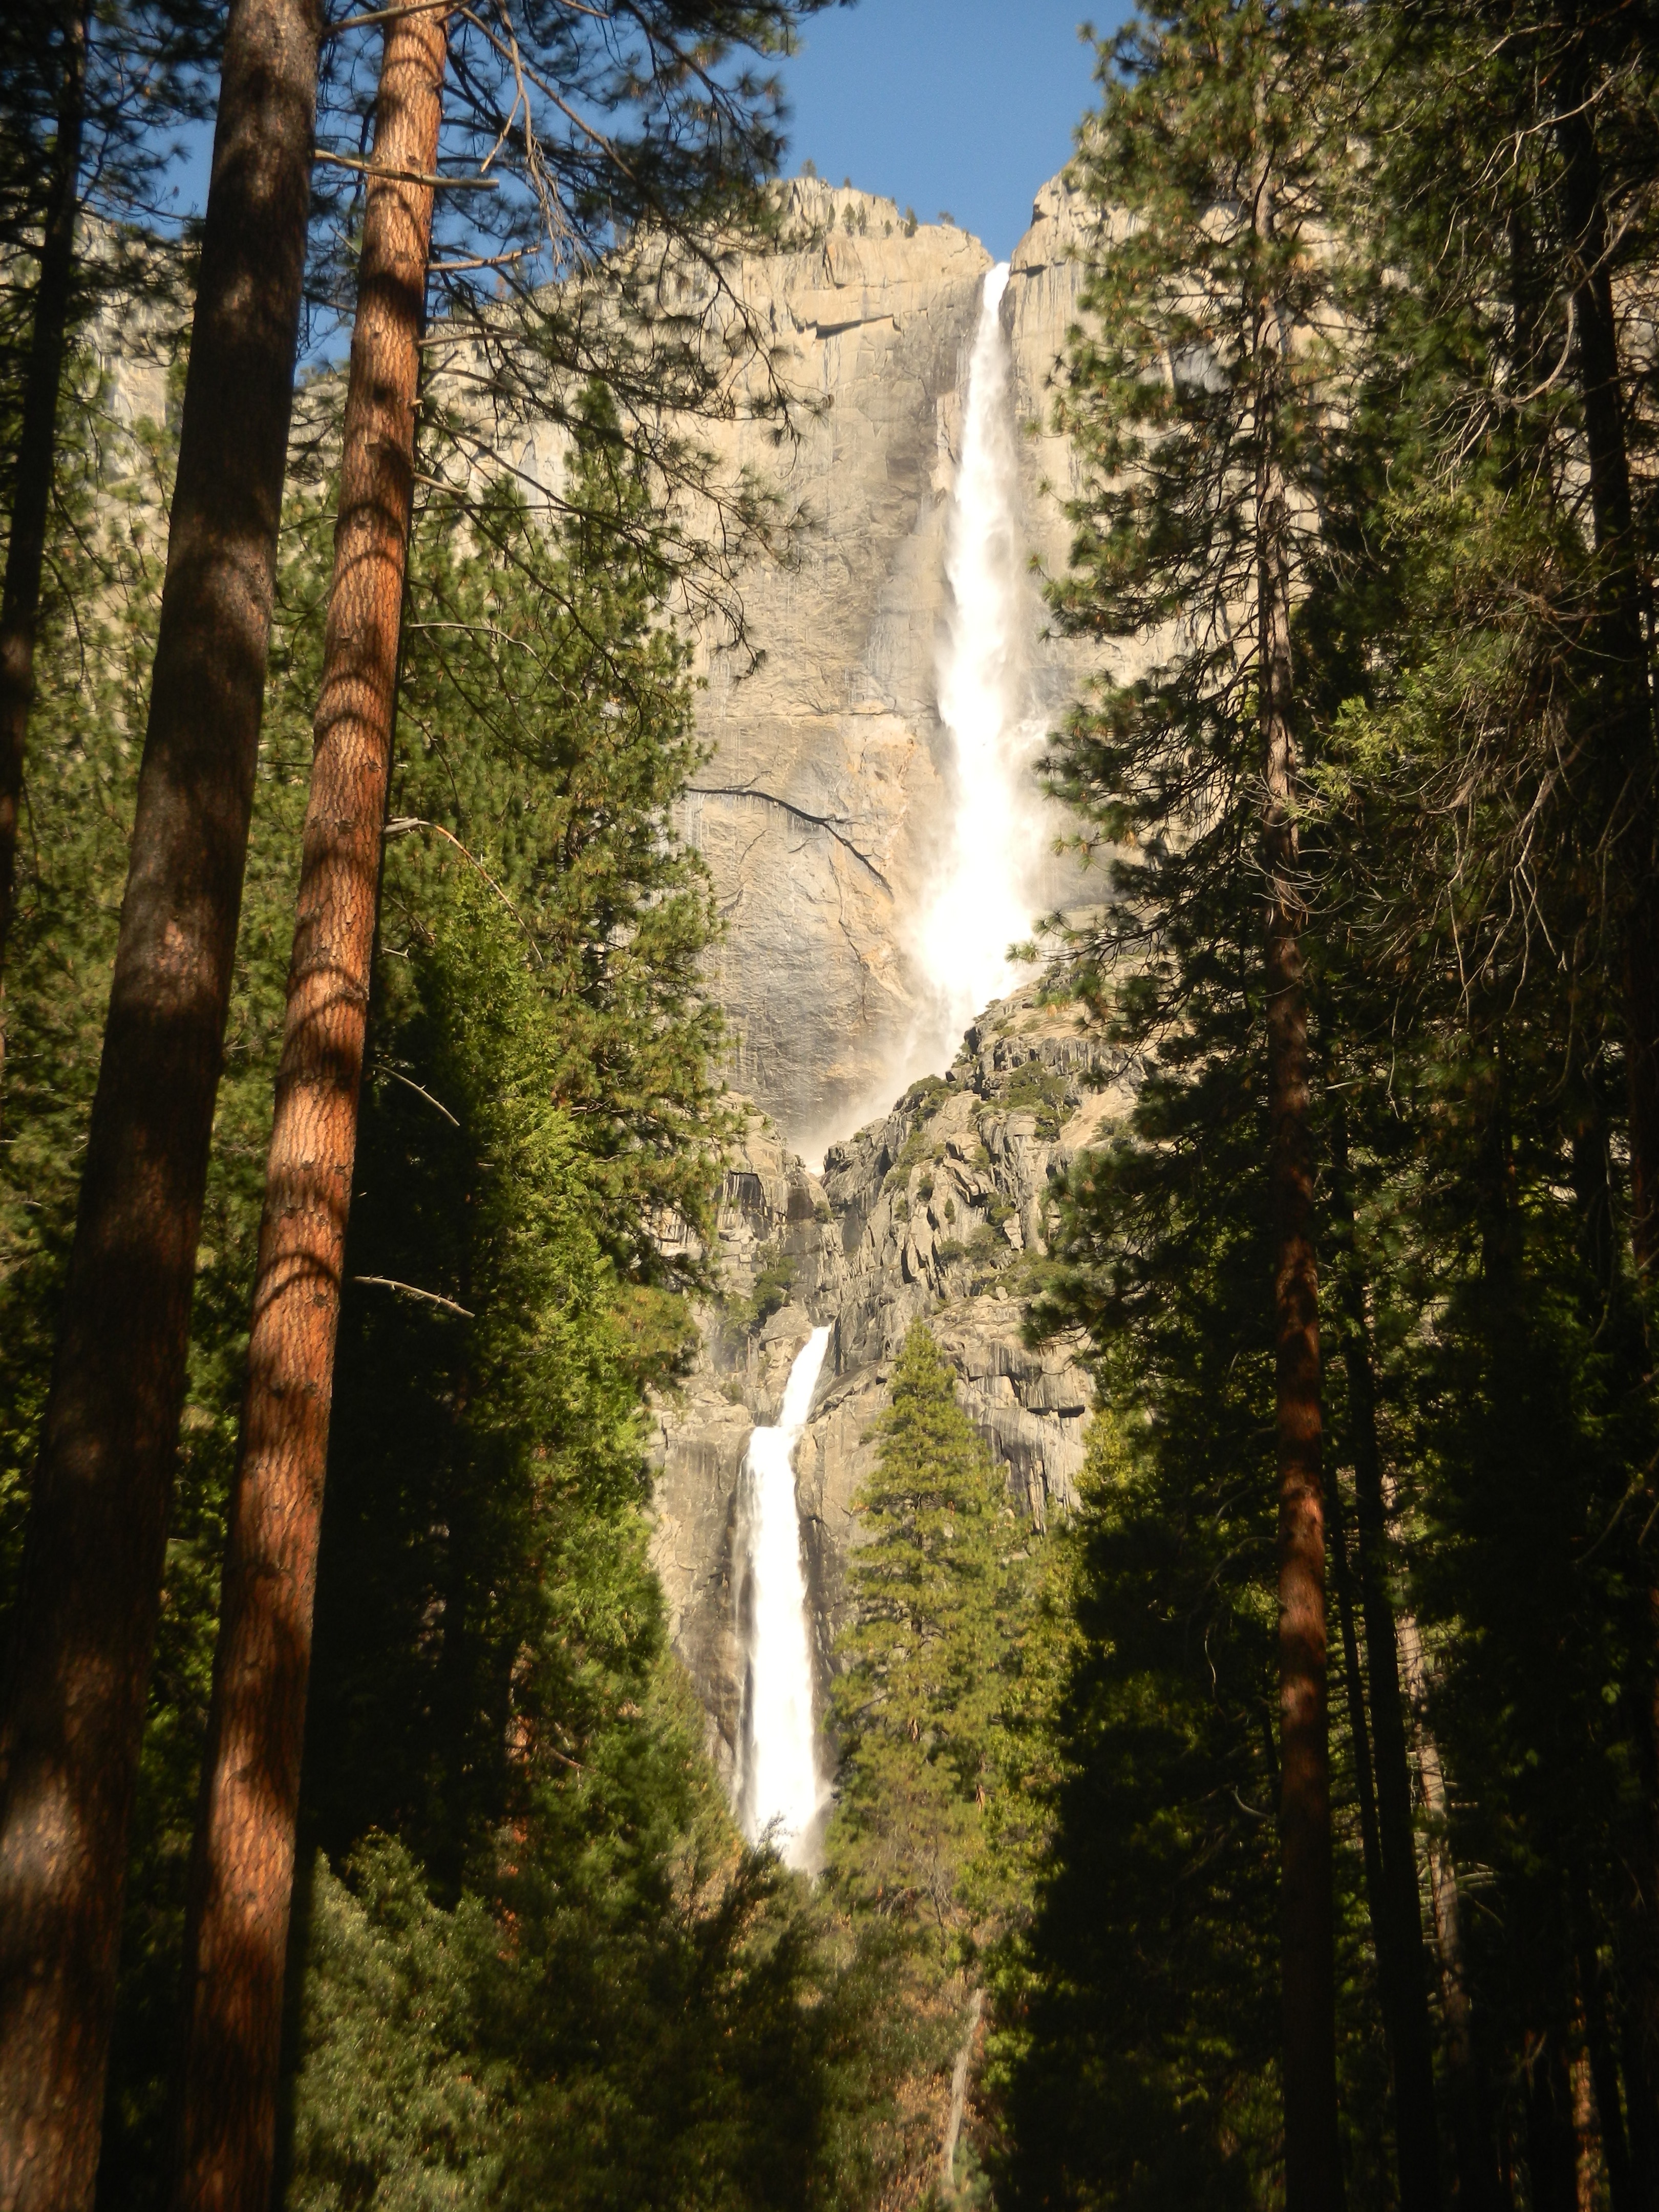 The waterfall photo